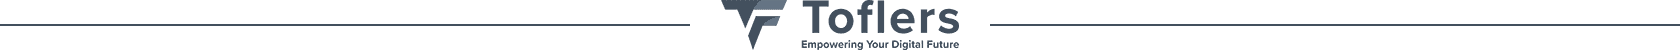 Toflers-logo